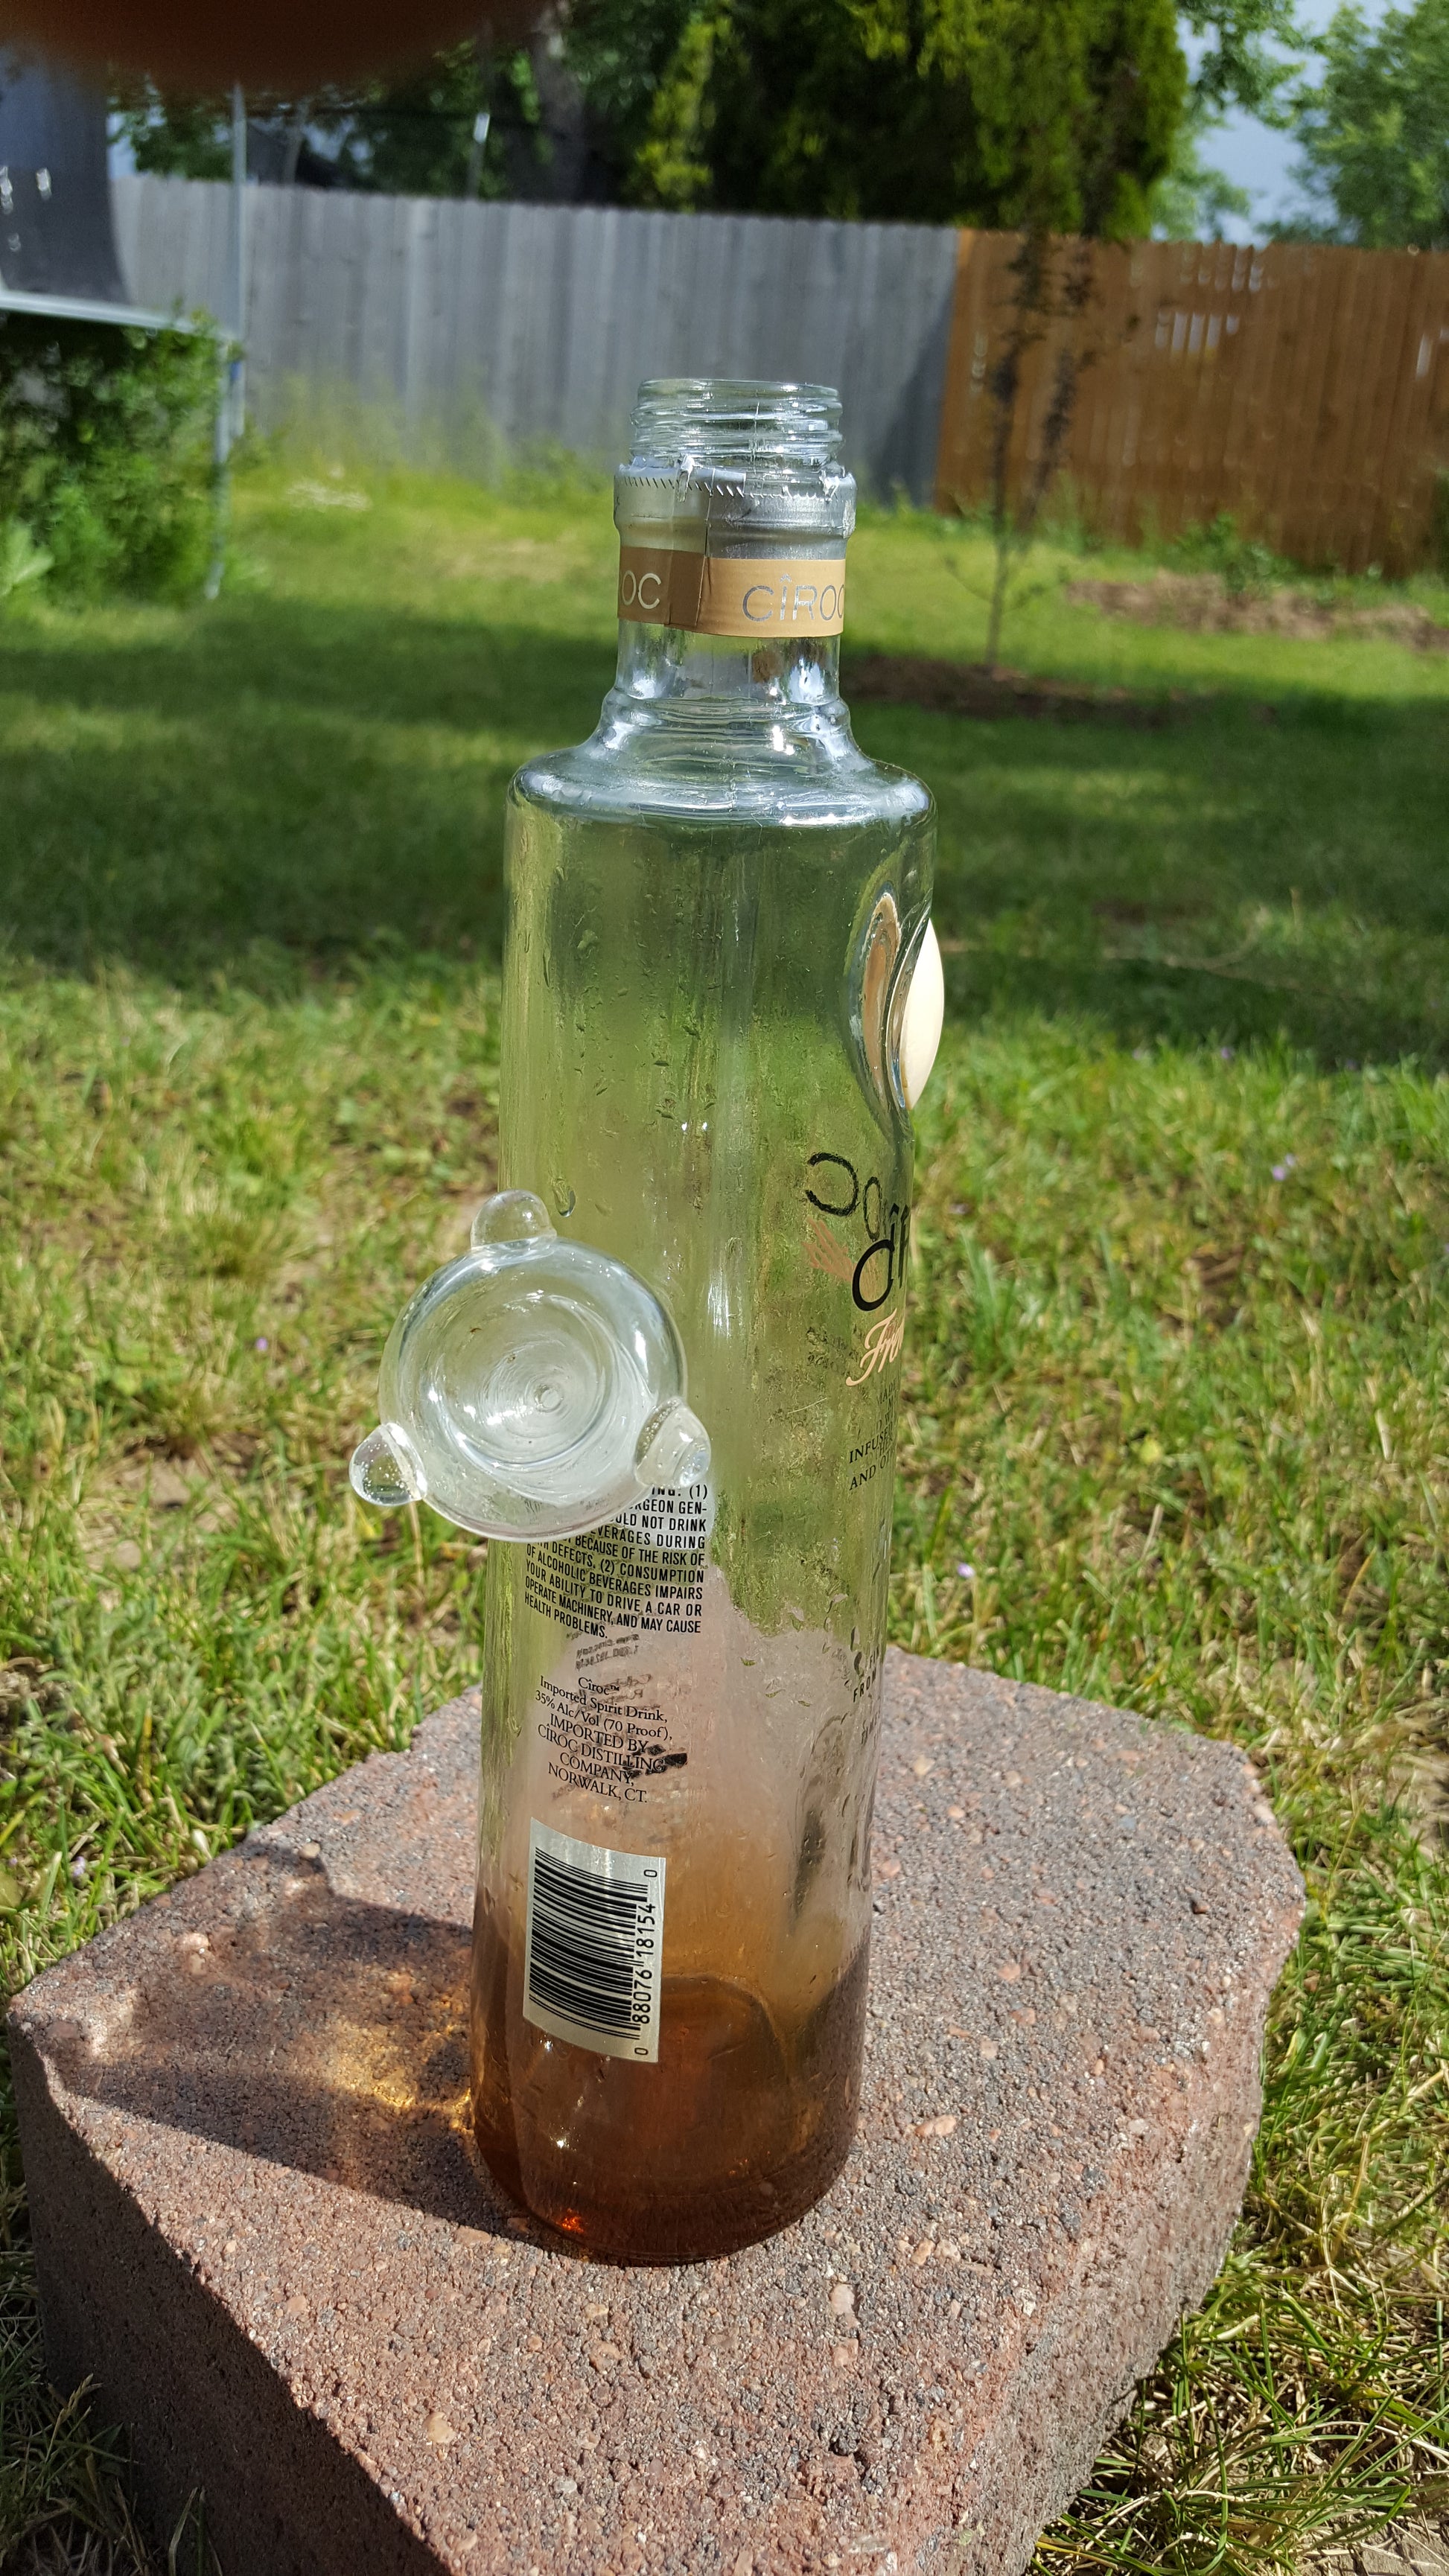 Ciroc Vodka Original – BottleKeep